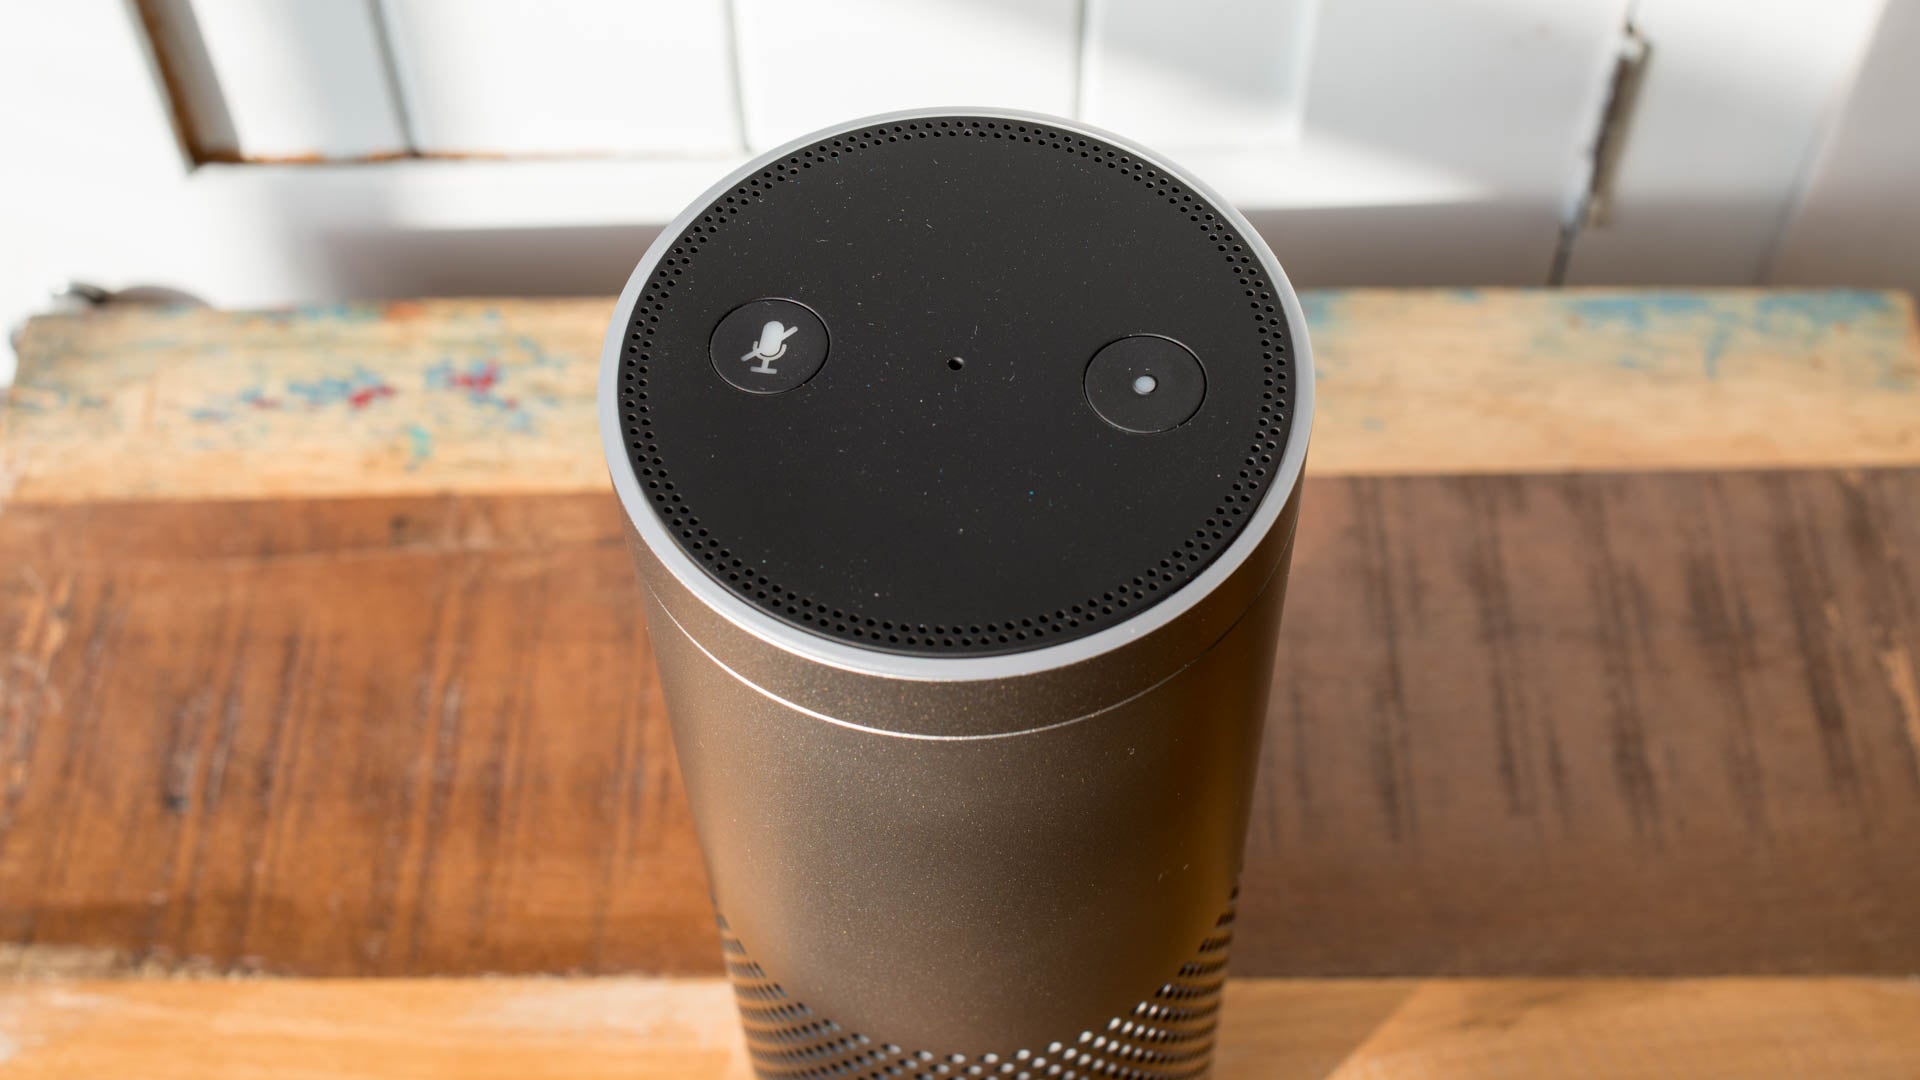 Amazon Echo Plus on wooden table near window